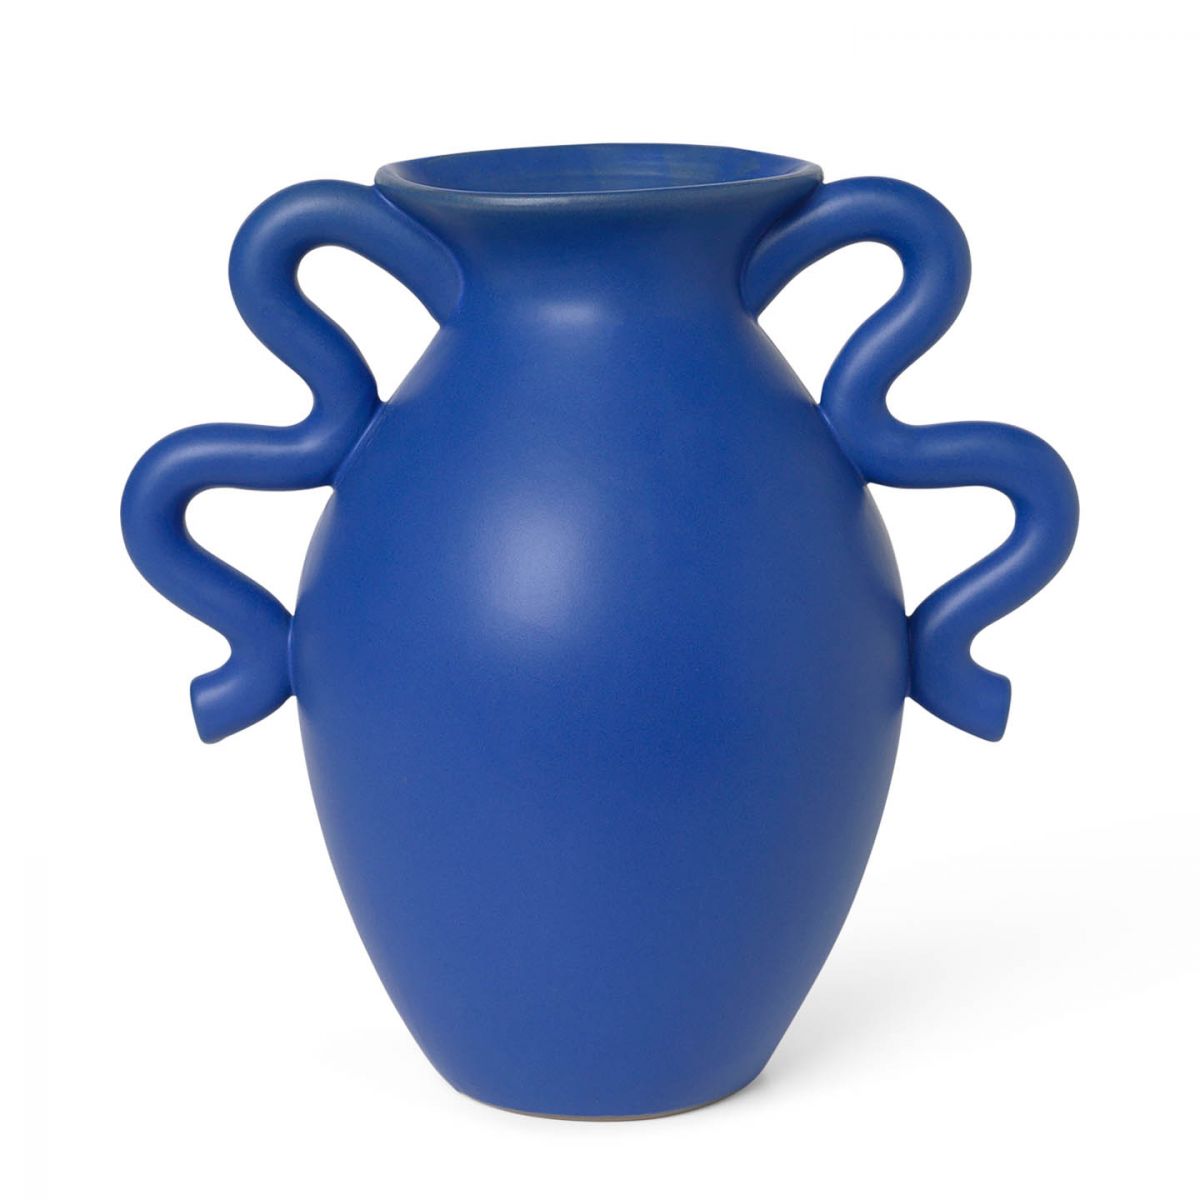 Verso Table Vase - Bright blue